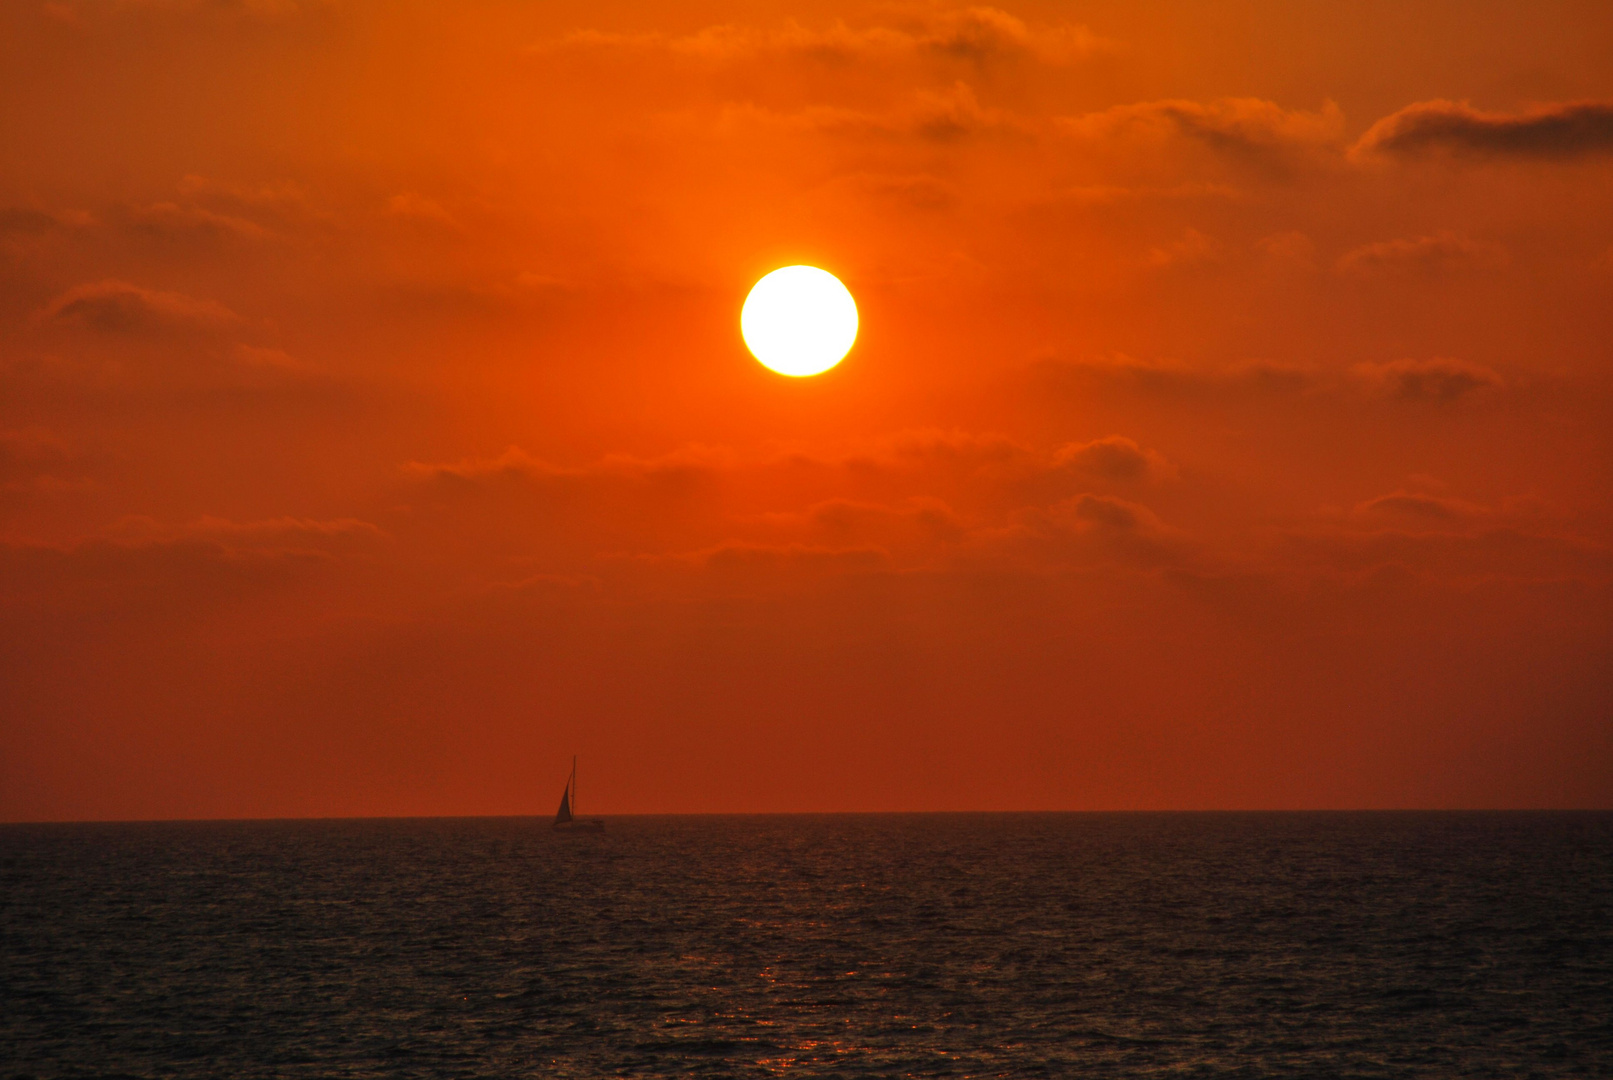 Sunset at the Mediterranean Sea, Israel